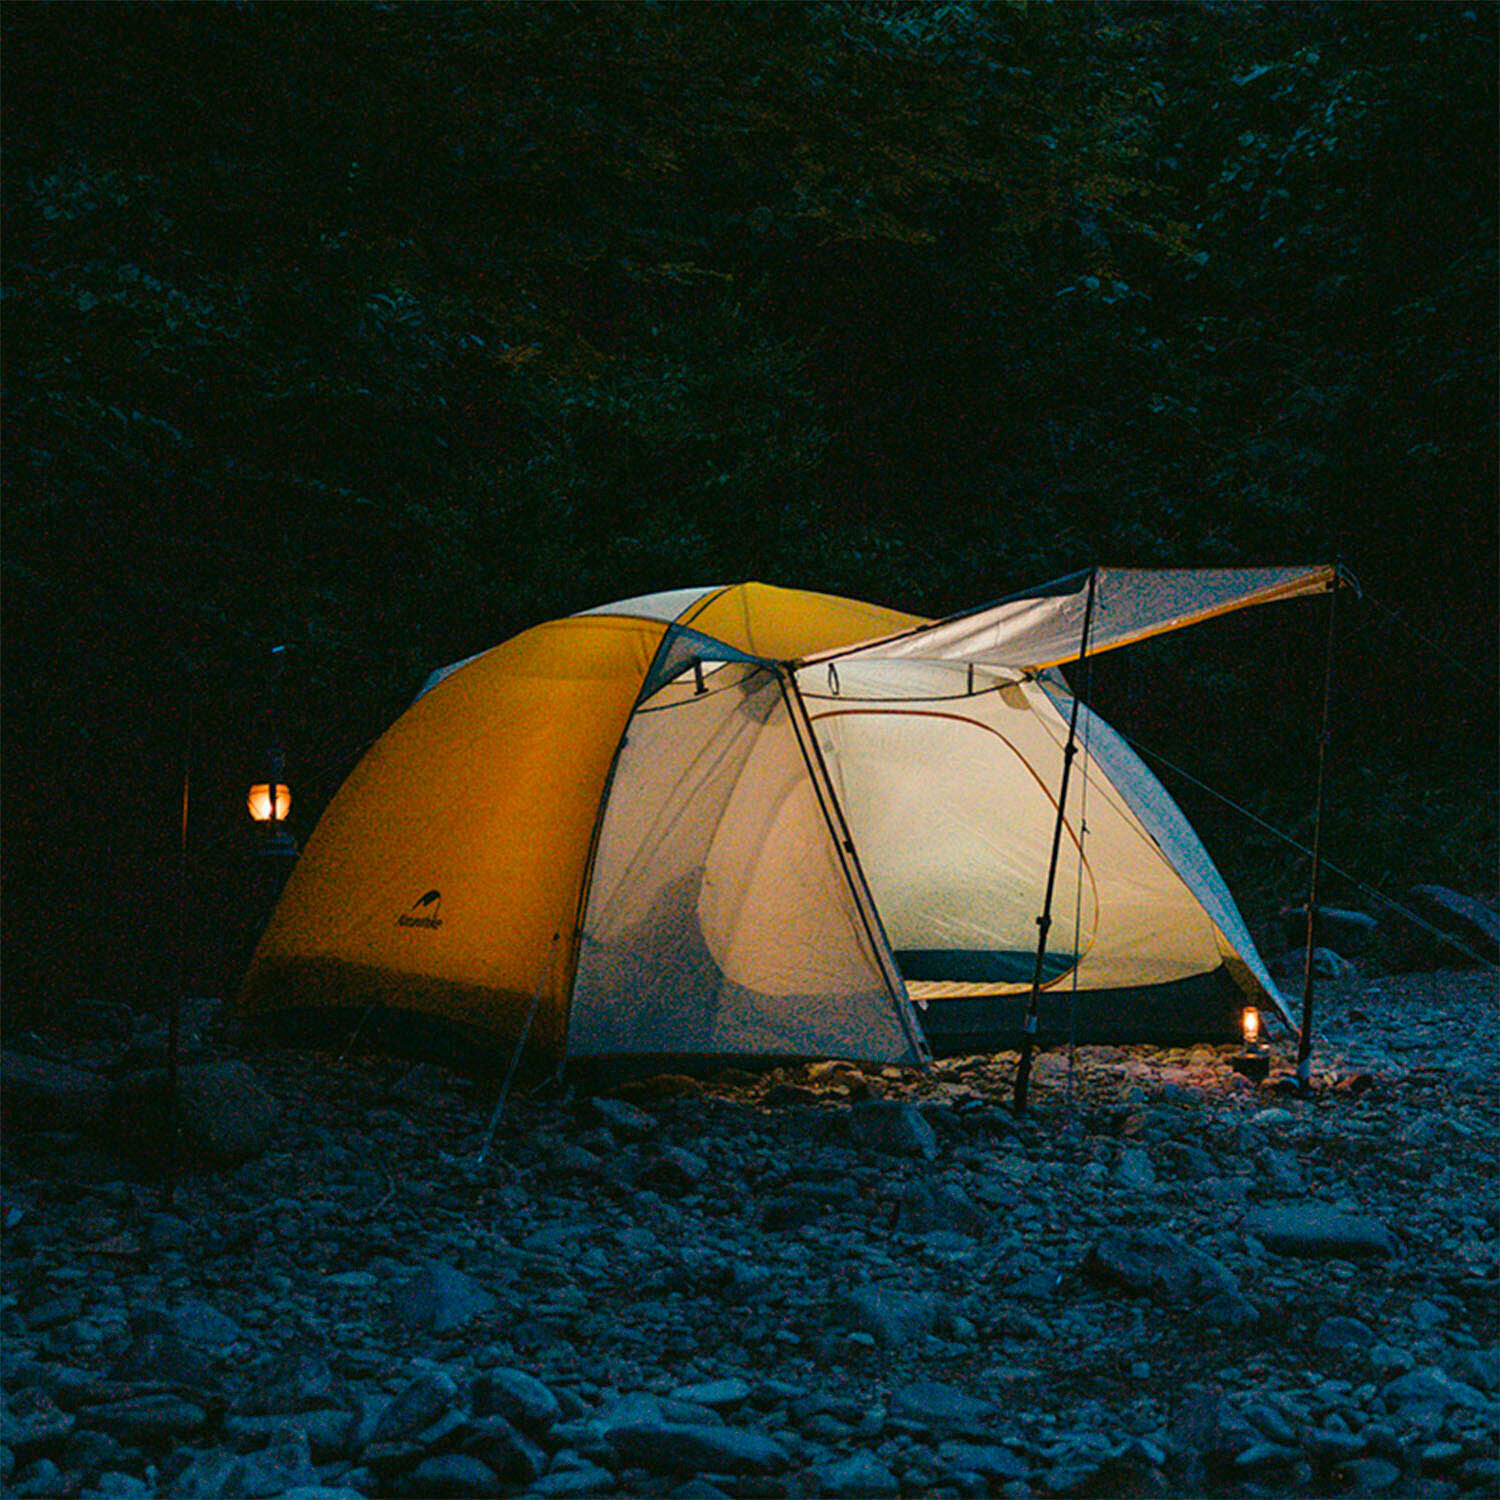 Палатка Naturehike Cloud-Creek Series Tent 3 man Yellow Pro